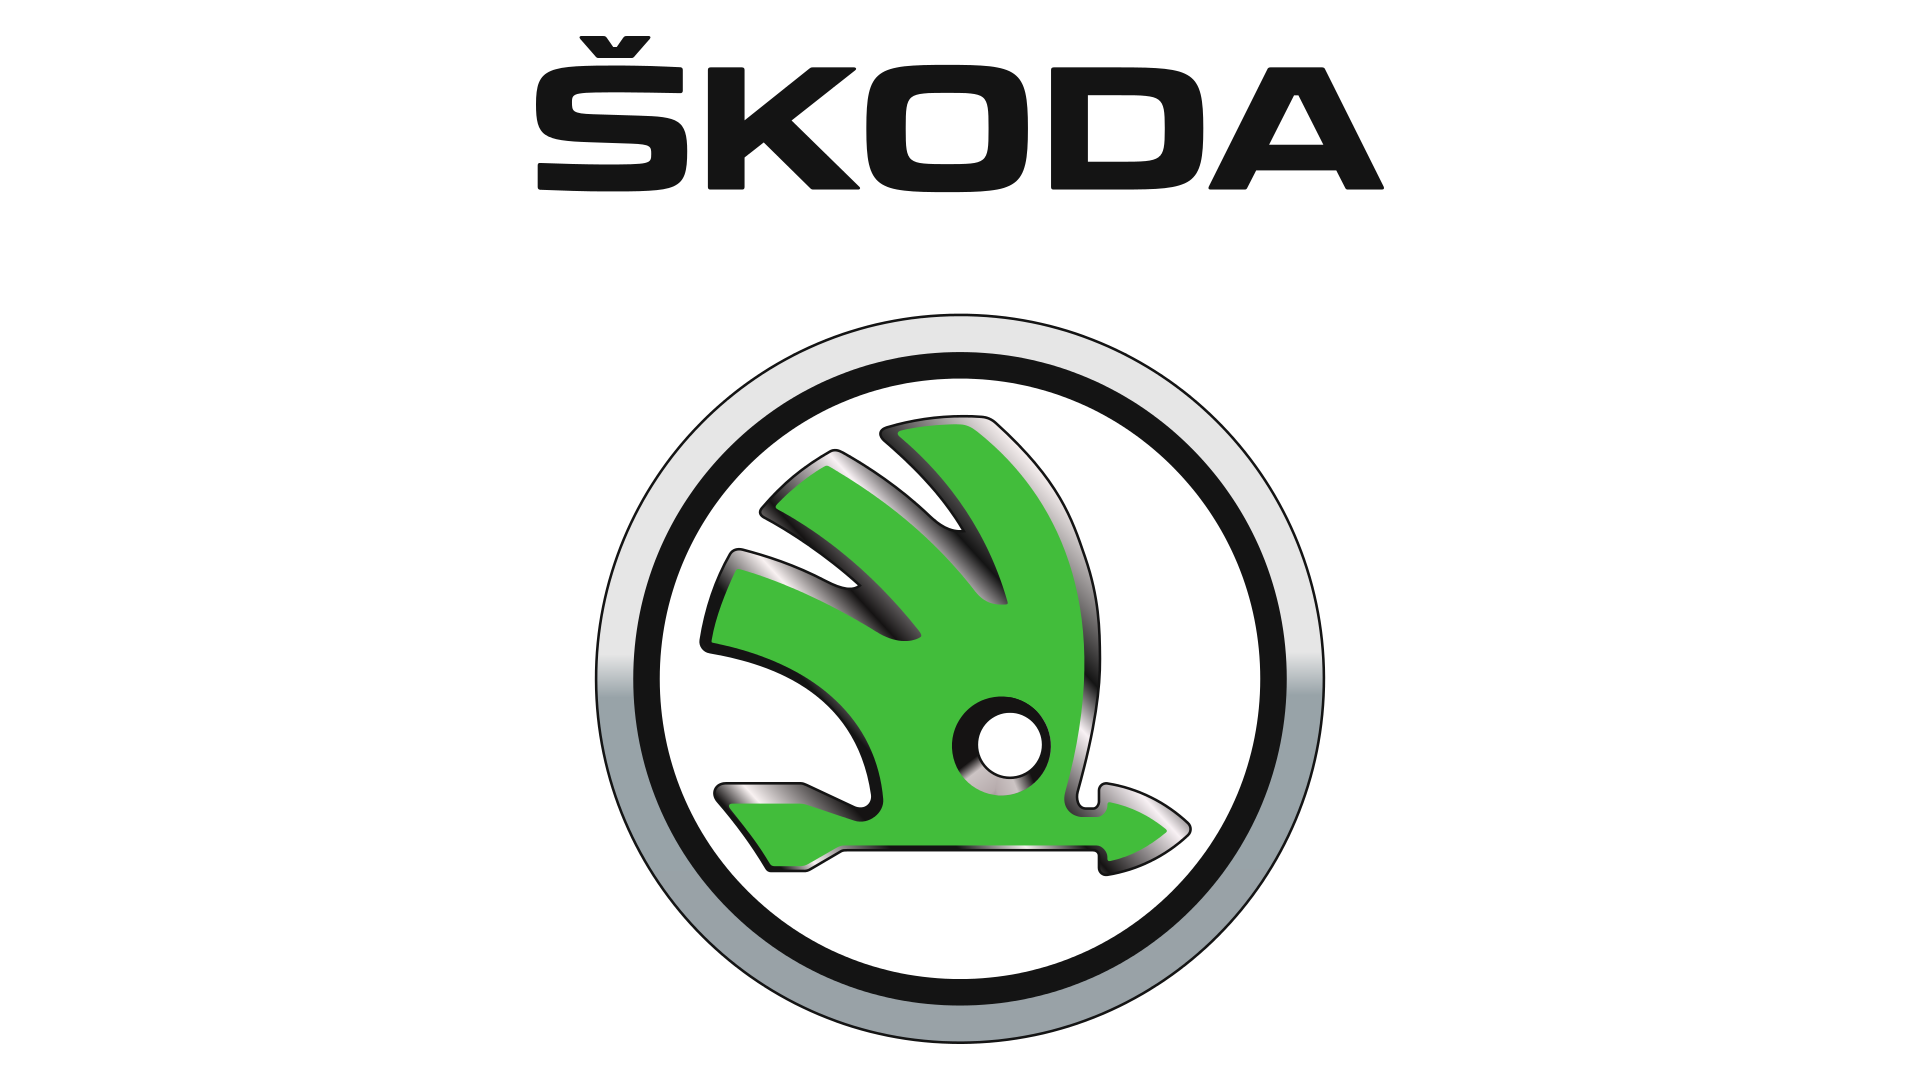 Skoda-logo-2011-1920×1080